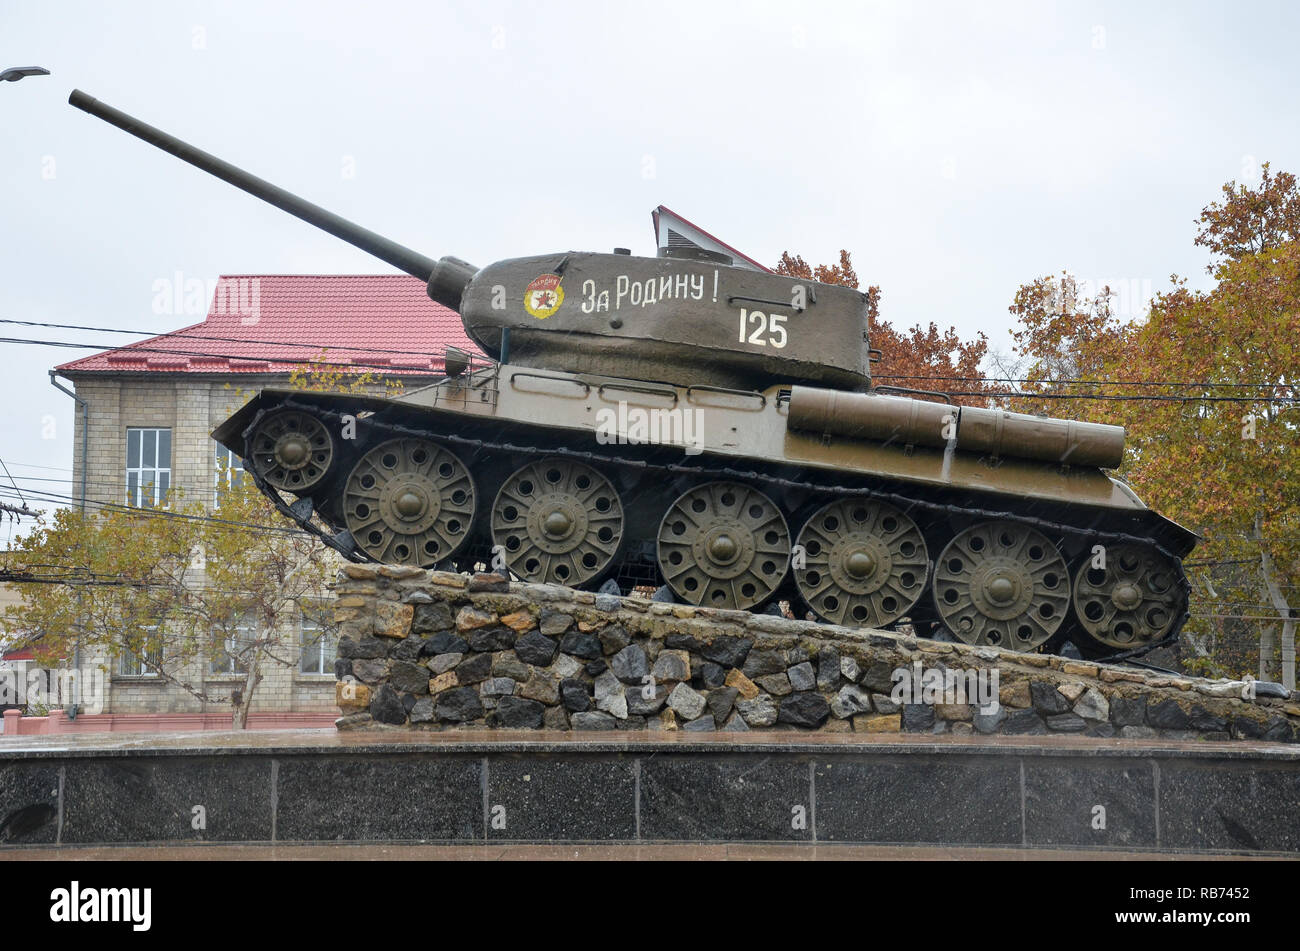 Tank Monument from the Great Patriotic War, Tiraspol, Transnistria (Pridnestrovian Moldavian Republic), breakway state from Moldova, November 2018 Stock Photo